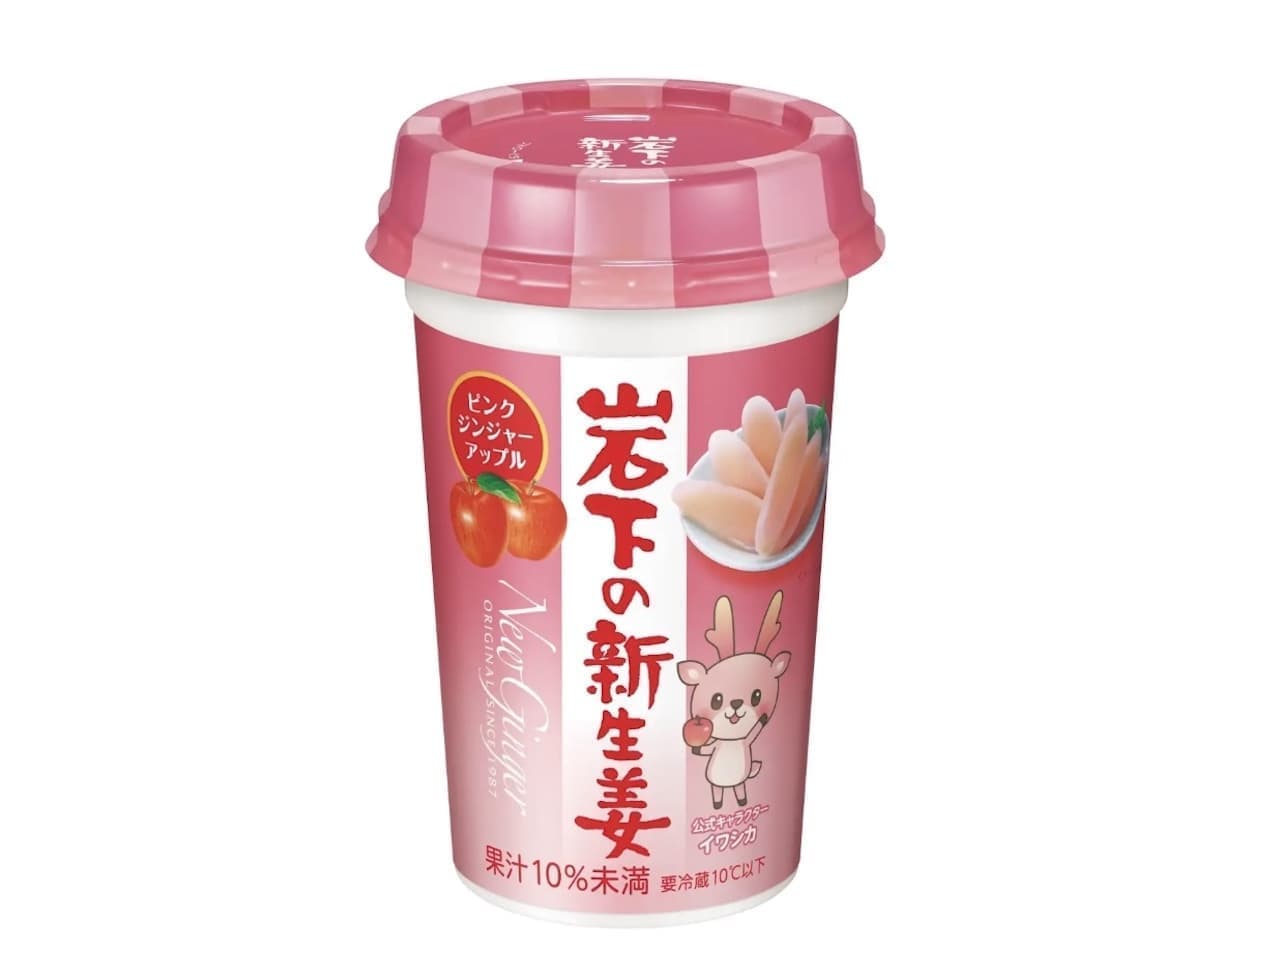 Iwashita Shin-Ginger Pink Ginger Apple" from Morinaga Milk Industry Co.